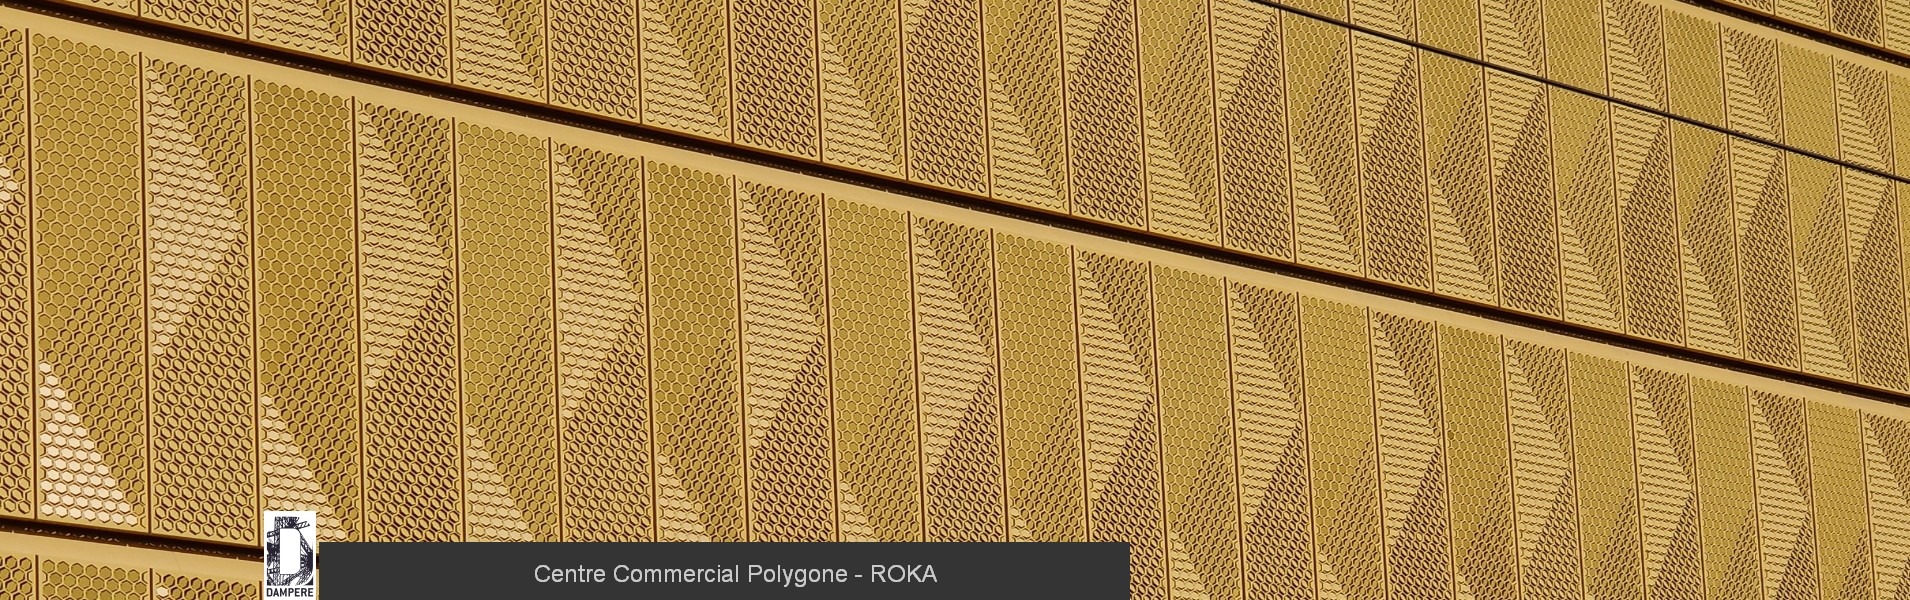 Centre Commercial Polygone ROKA 3